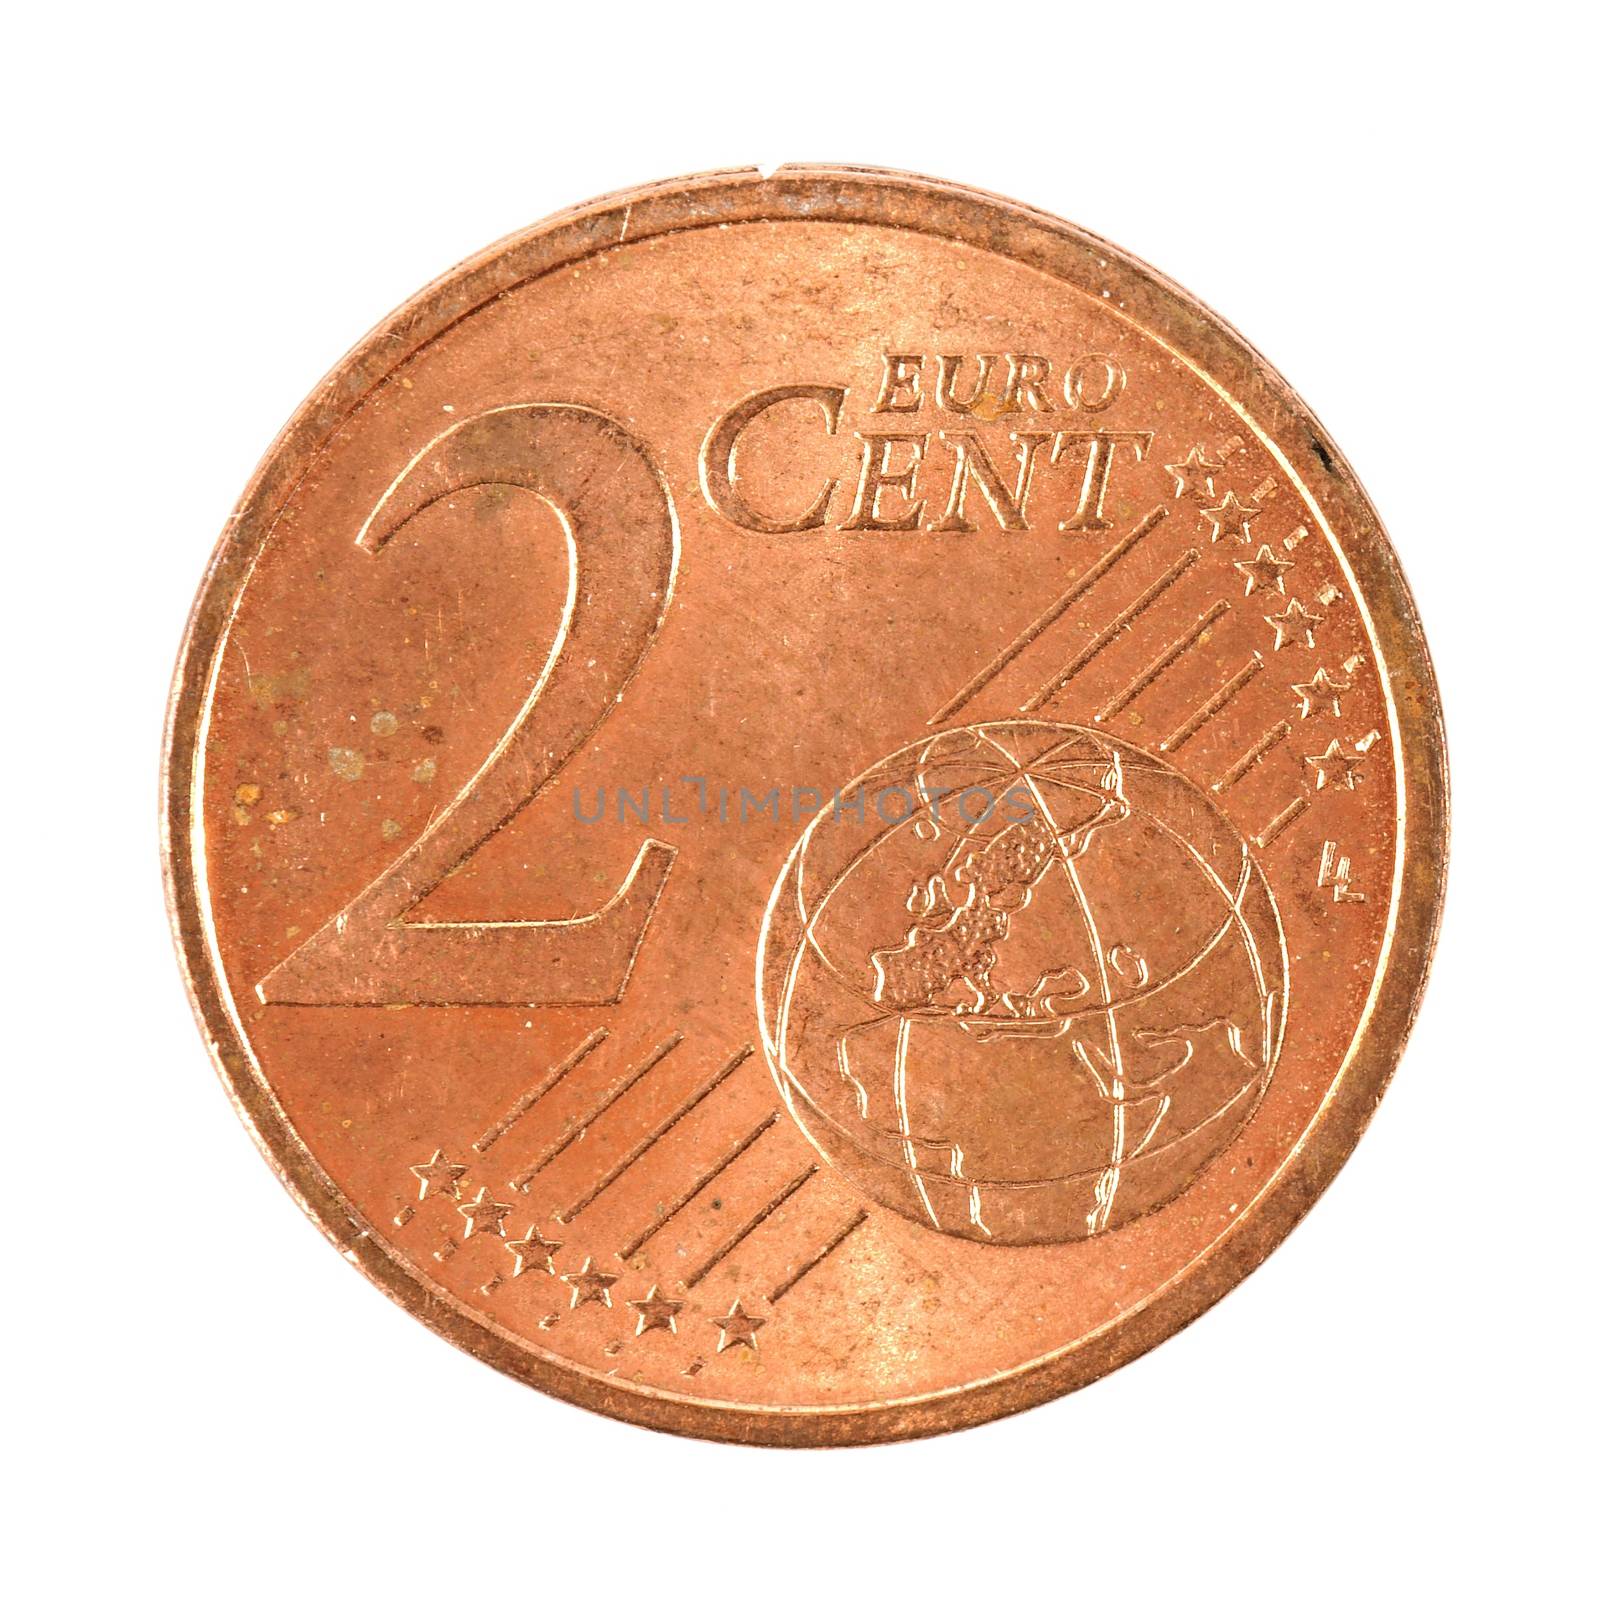 2 Euro Cents Coin by Gudella